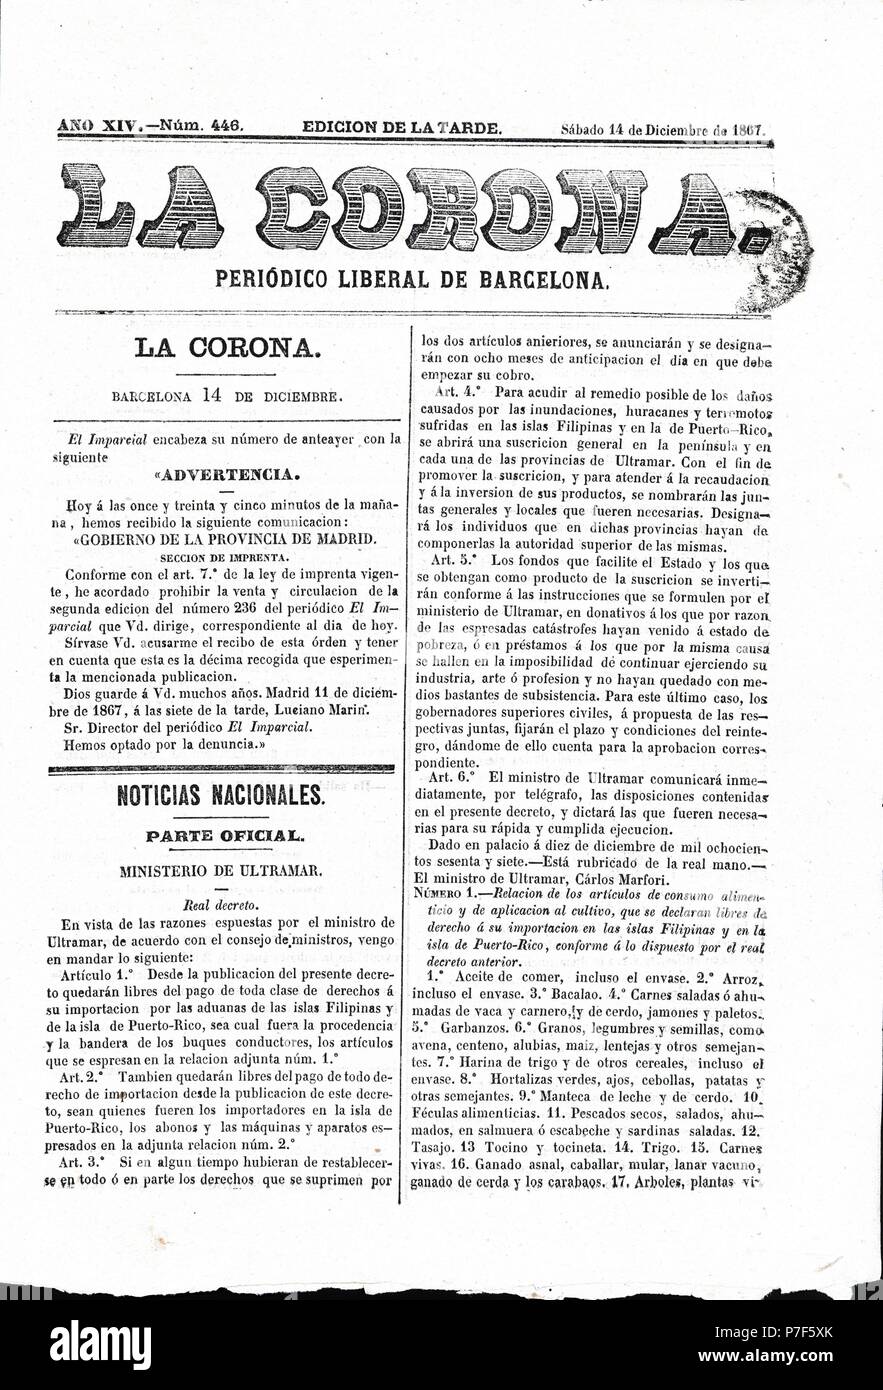 Portada del periódico liberal "La Corona", edición de tarde. Barcelona, 14 diciembre 1867. Stock Photo